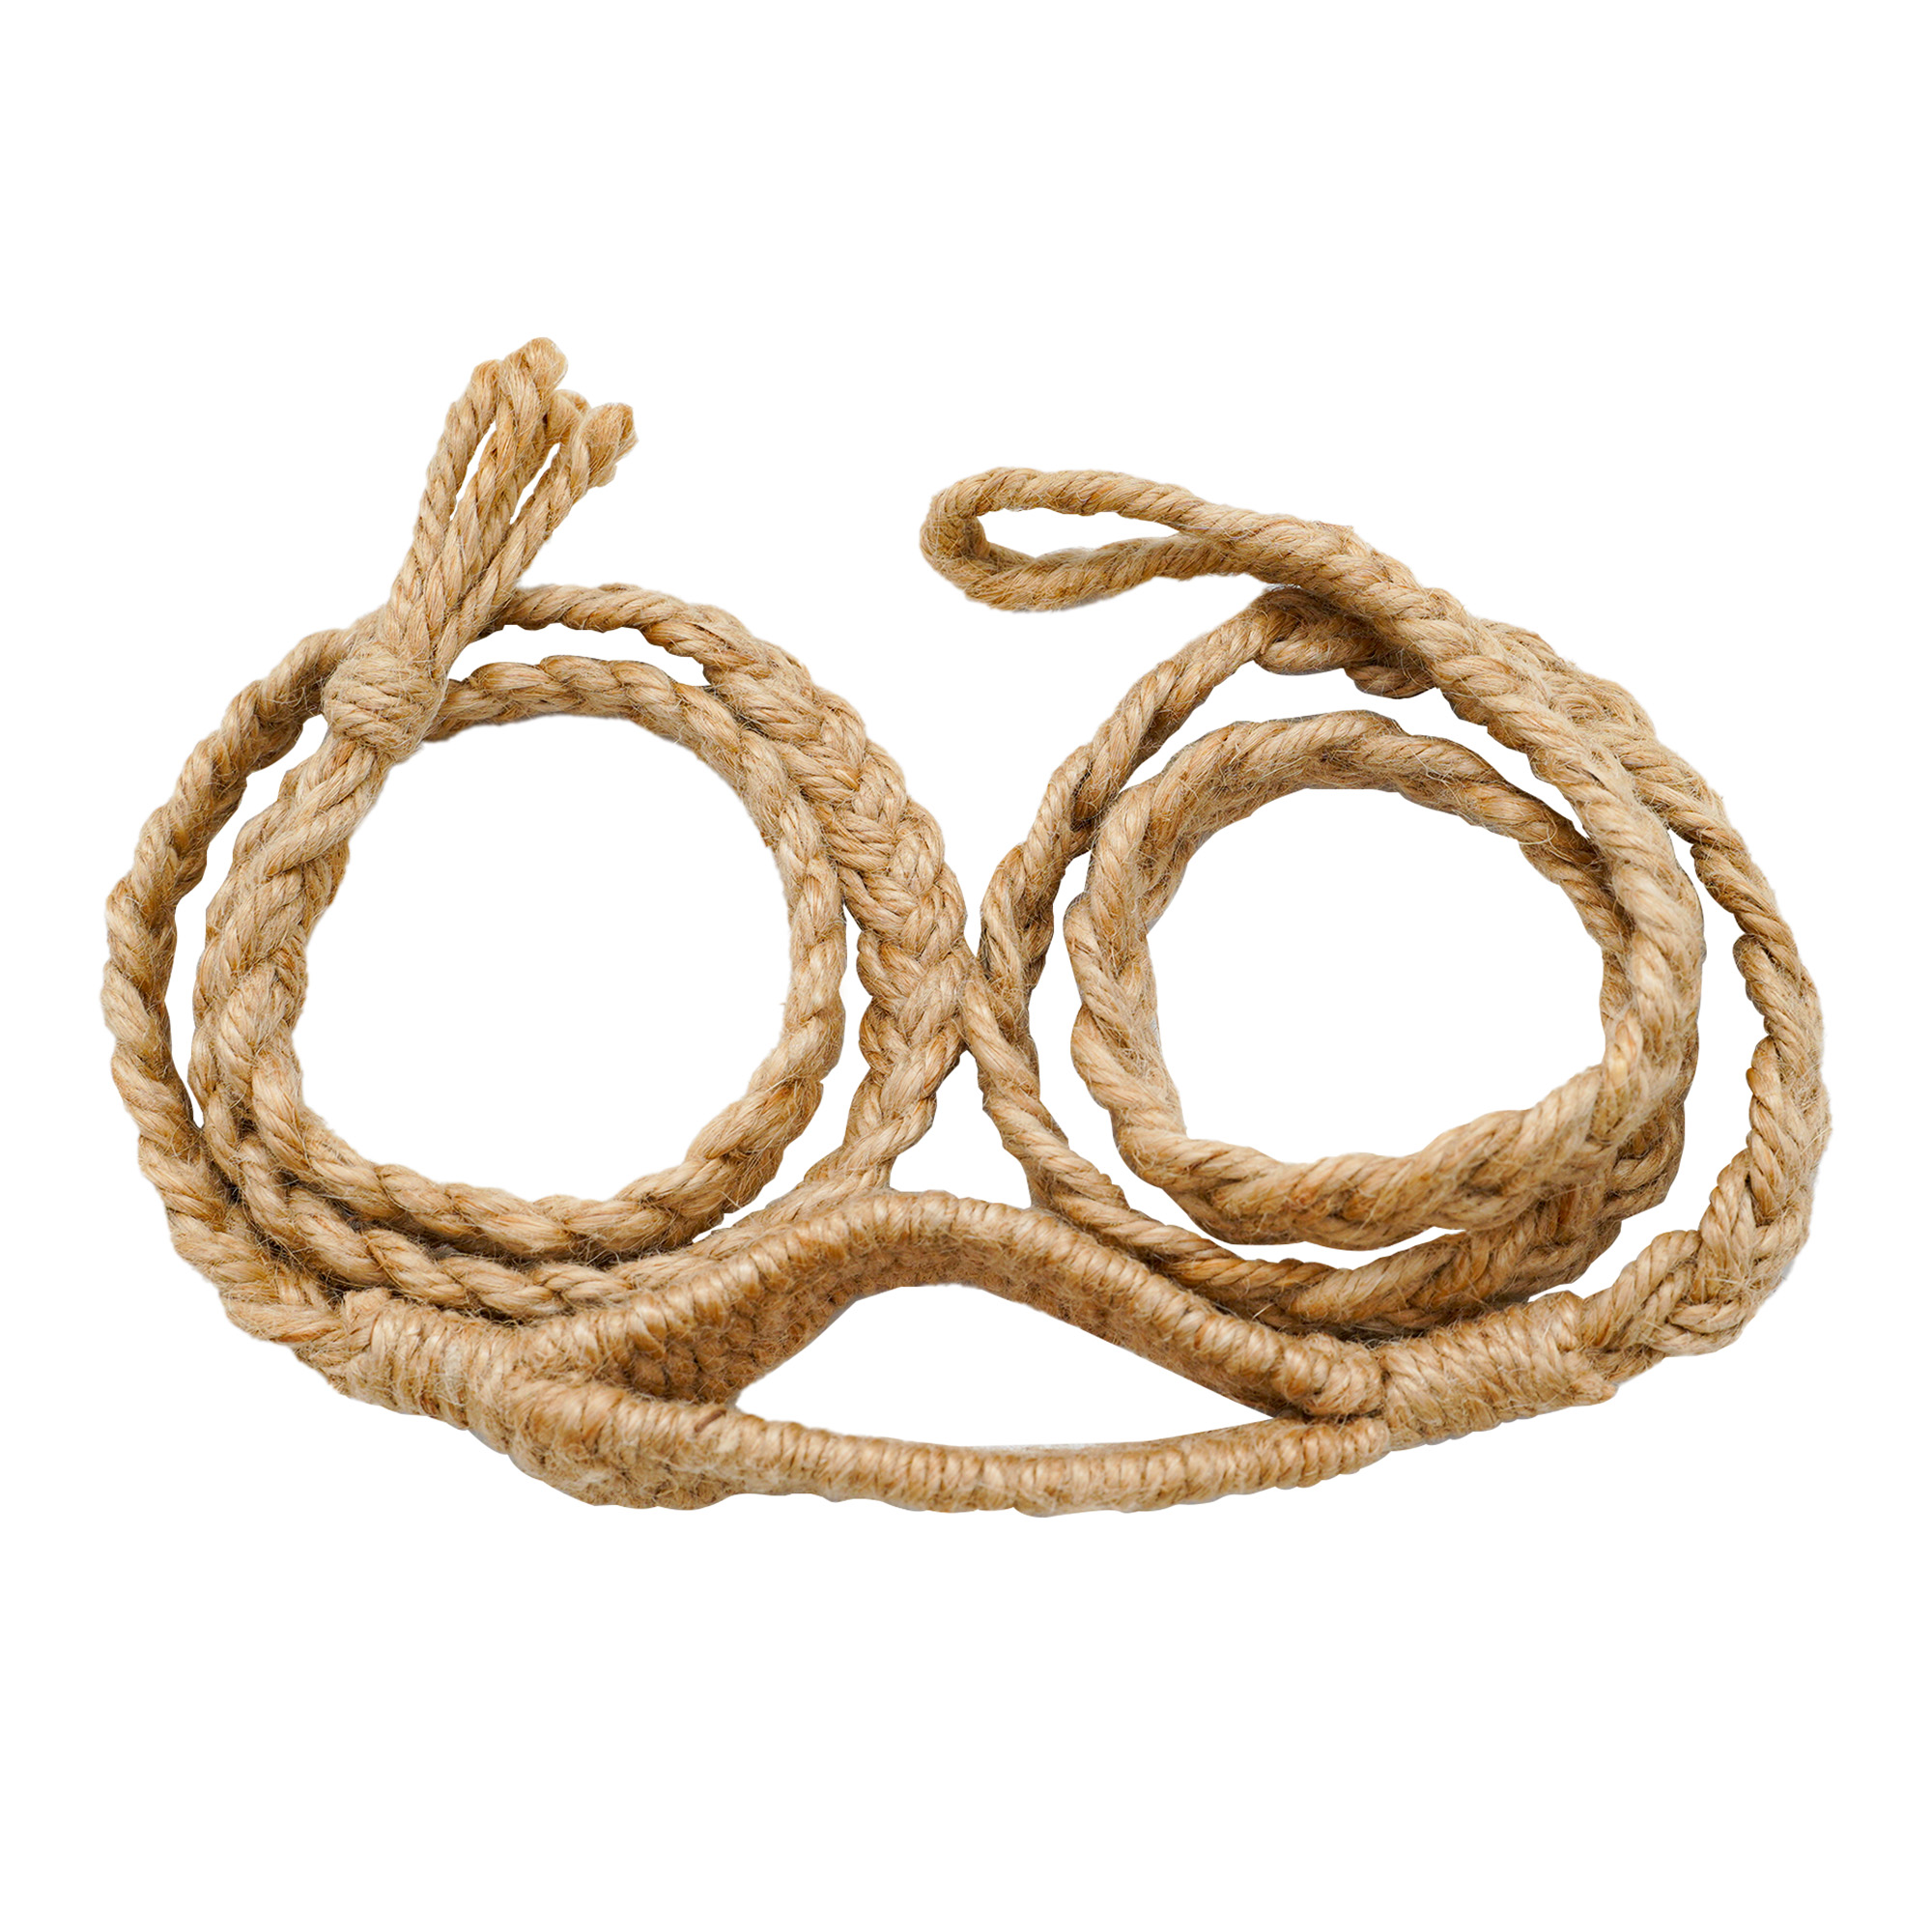 ✨ Historic Balearic Roman Greek Sling Handcrafted Braided Jute